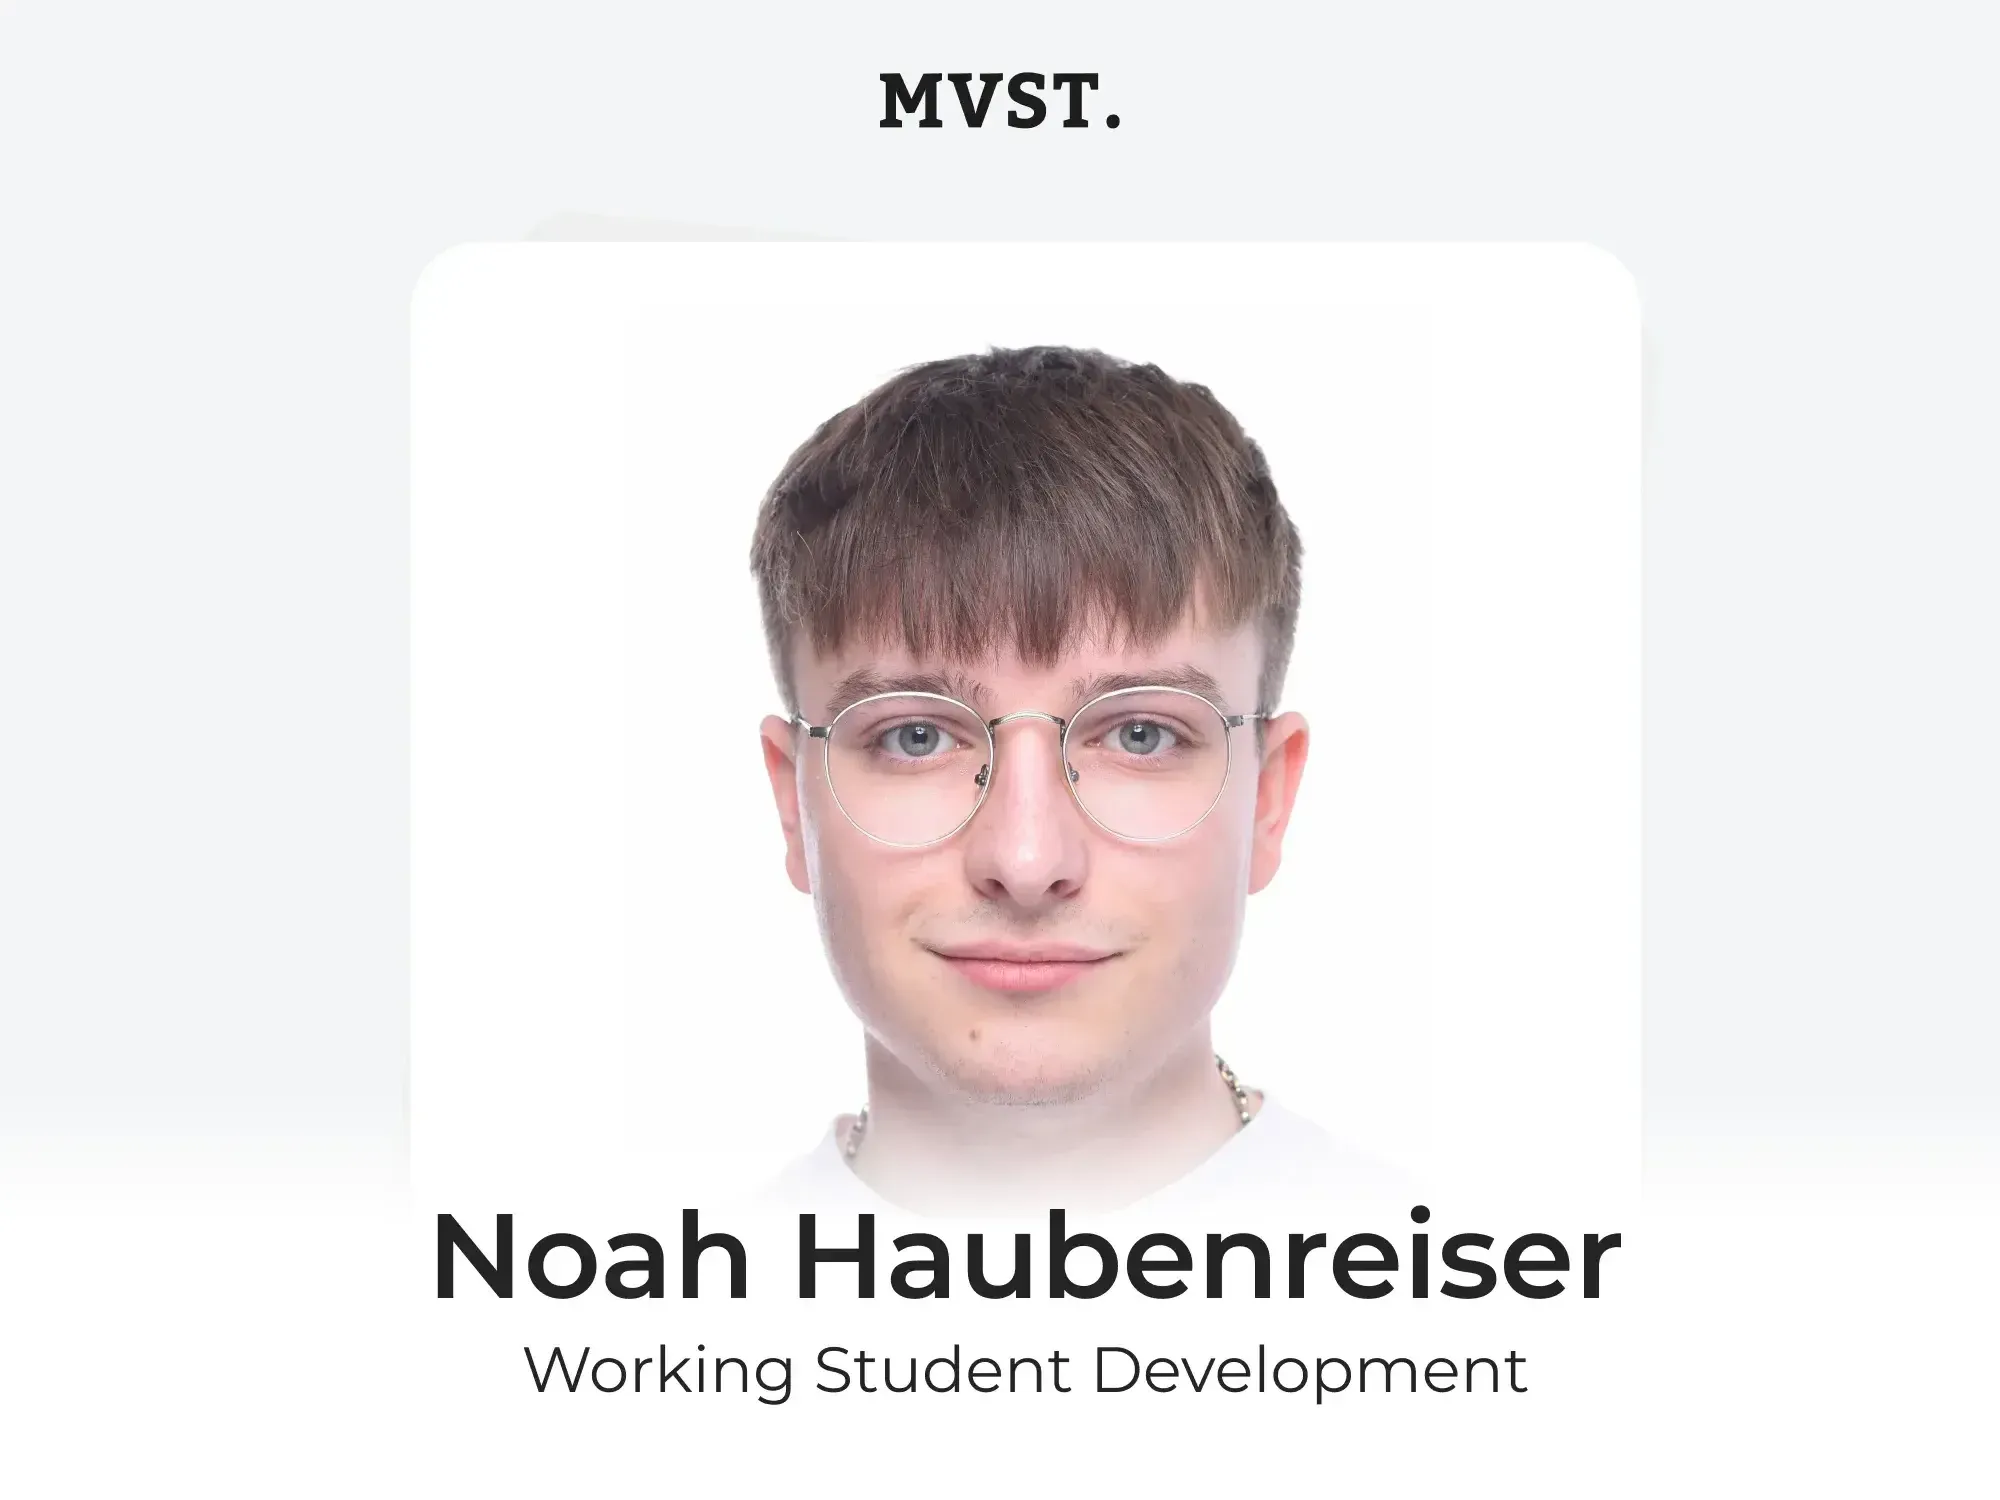 Willkommen bei MVST, Noah!